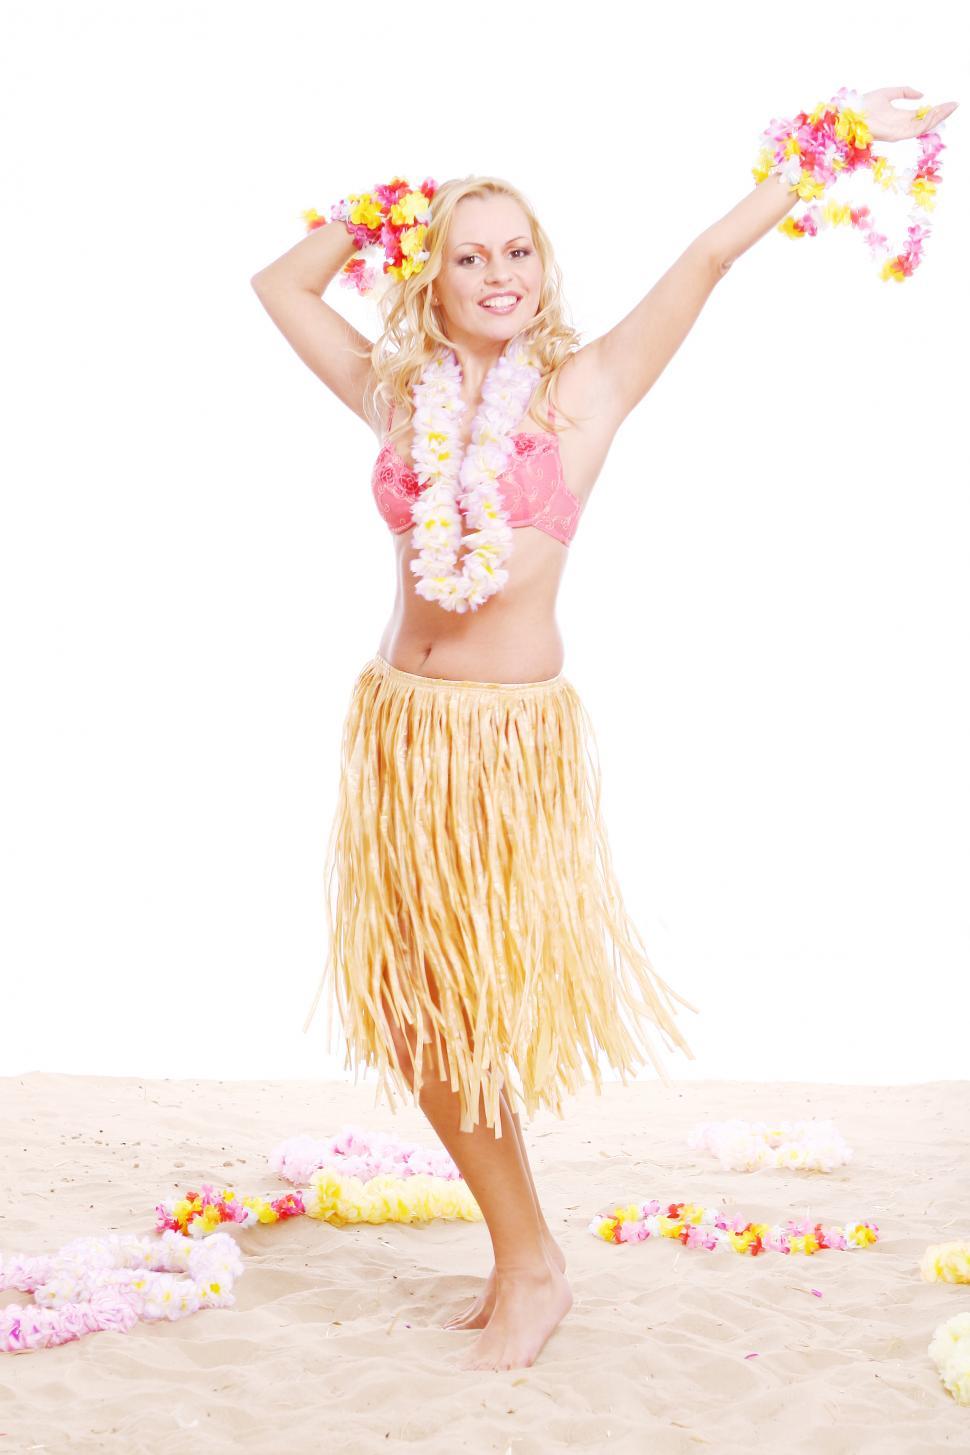 Free Image of Beautiful woman hawaii style 